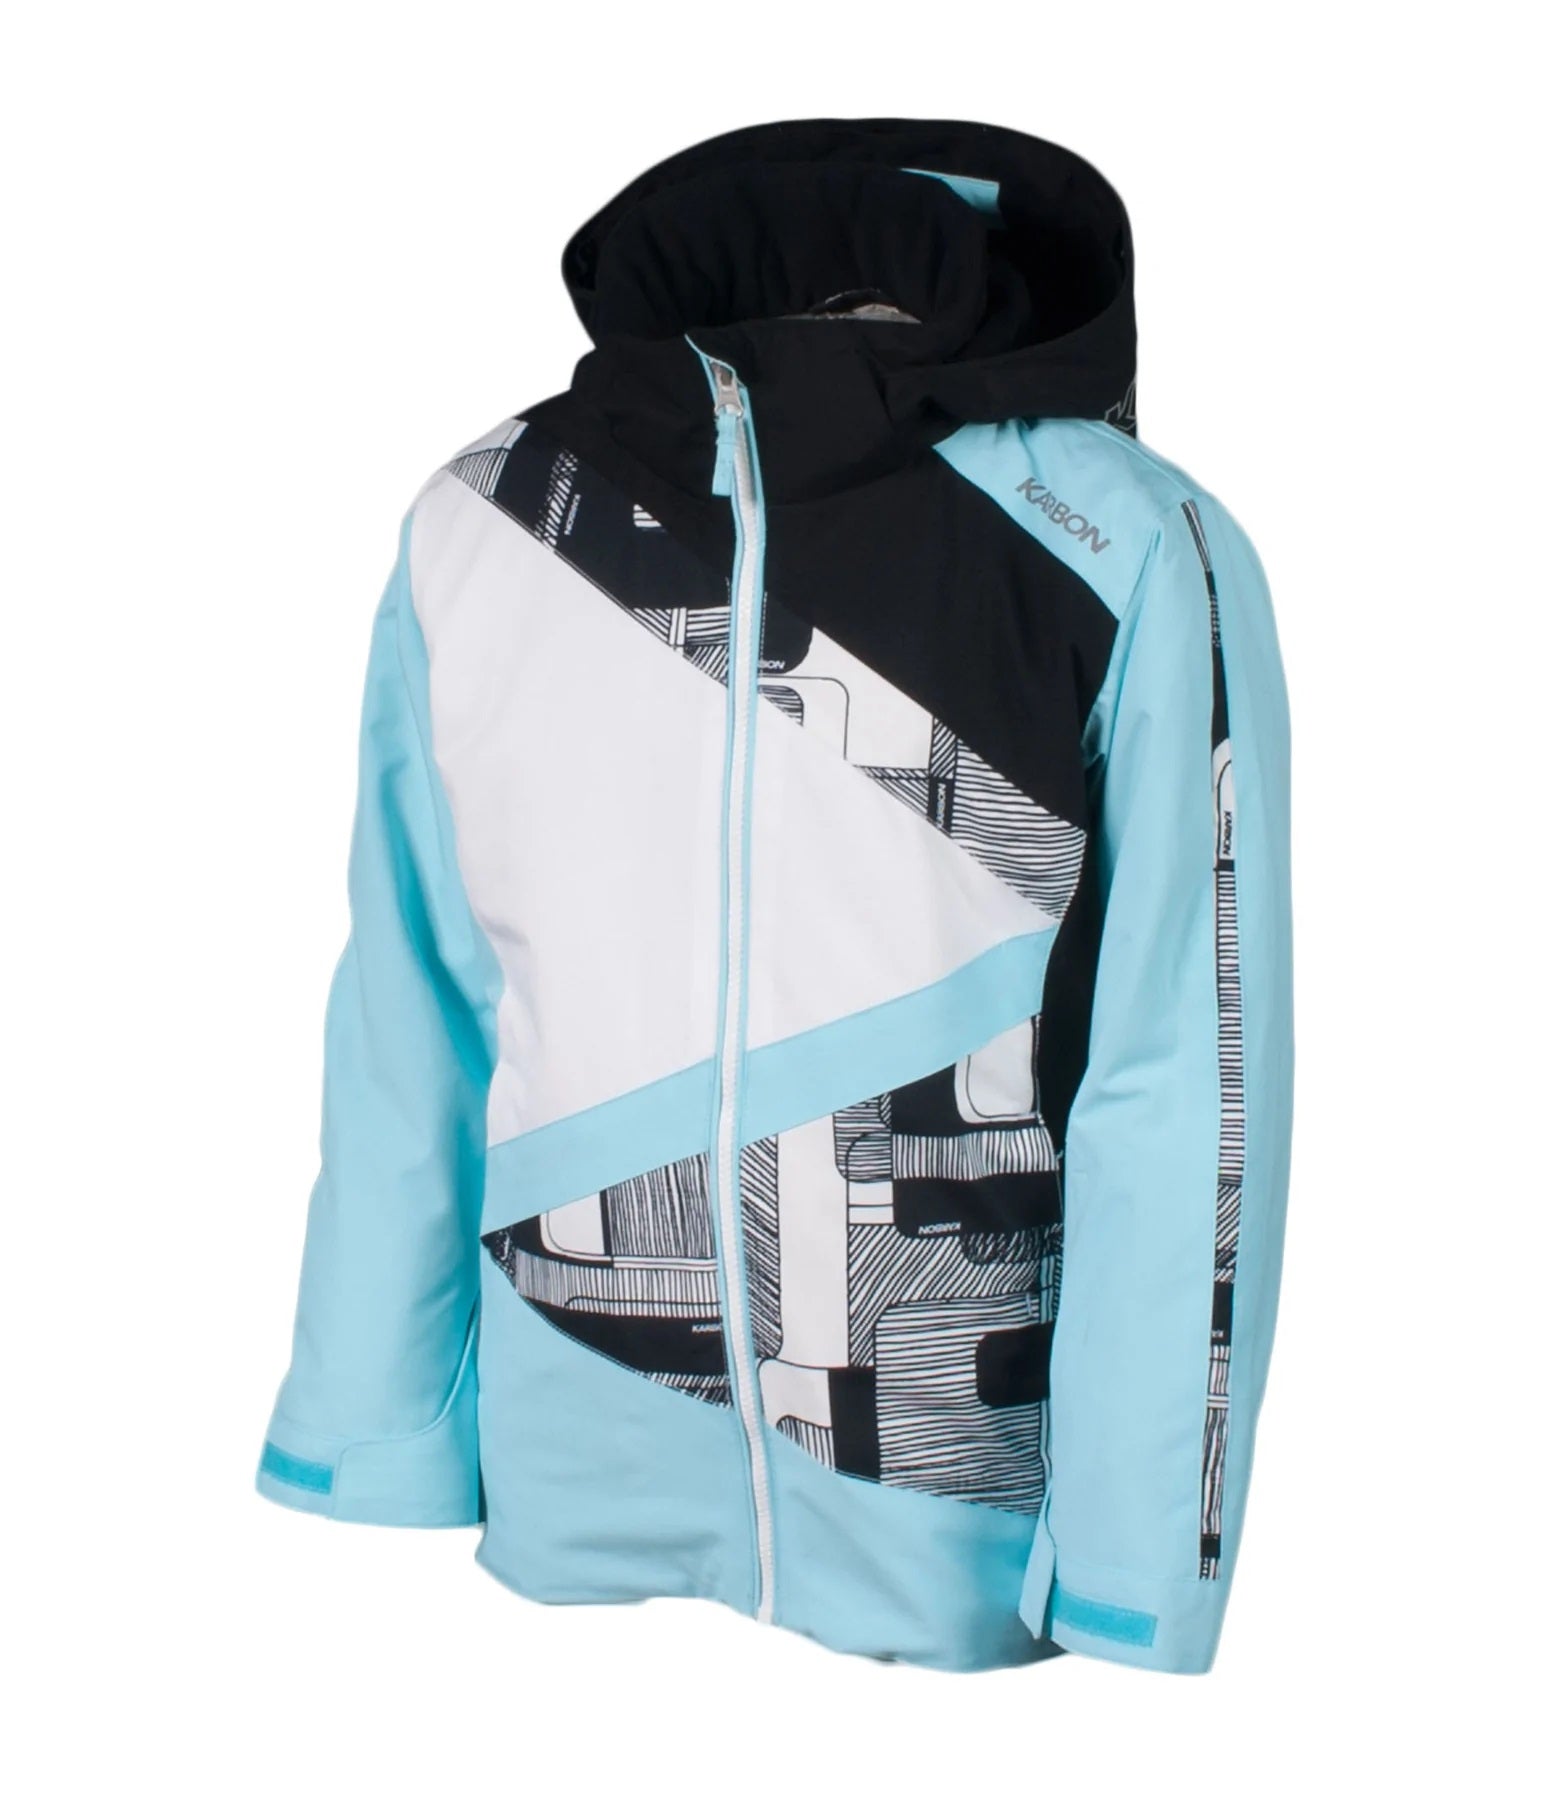 Karbon Answer Print Girls Ski Jacket